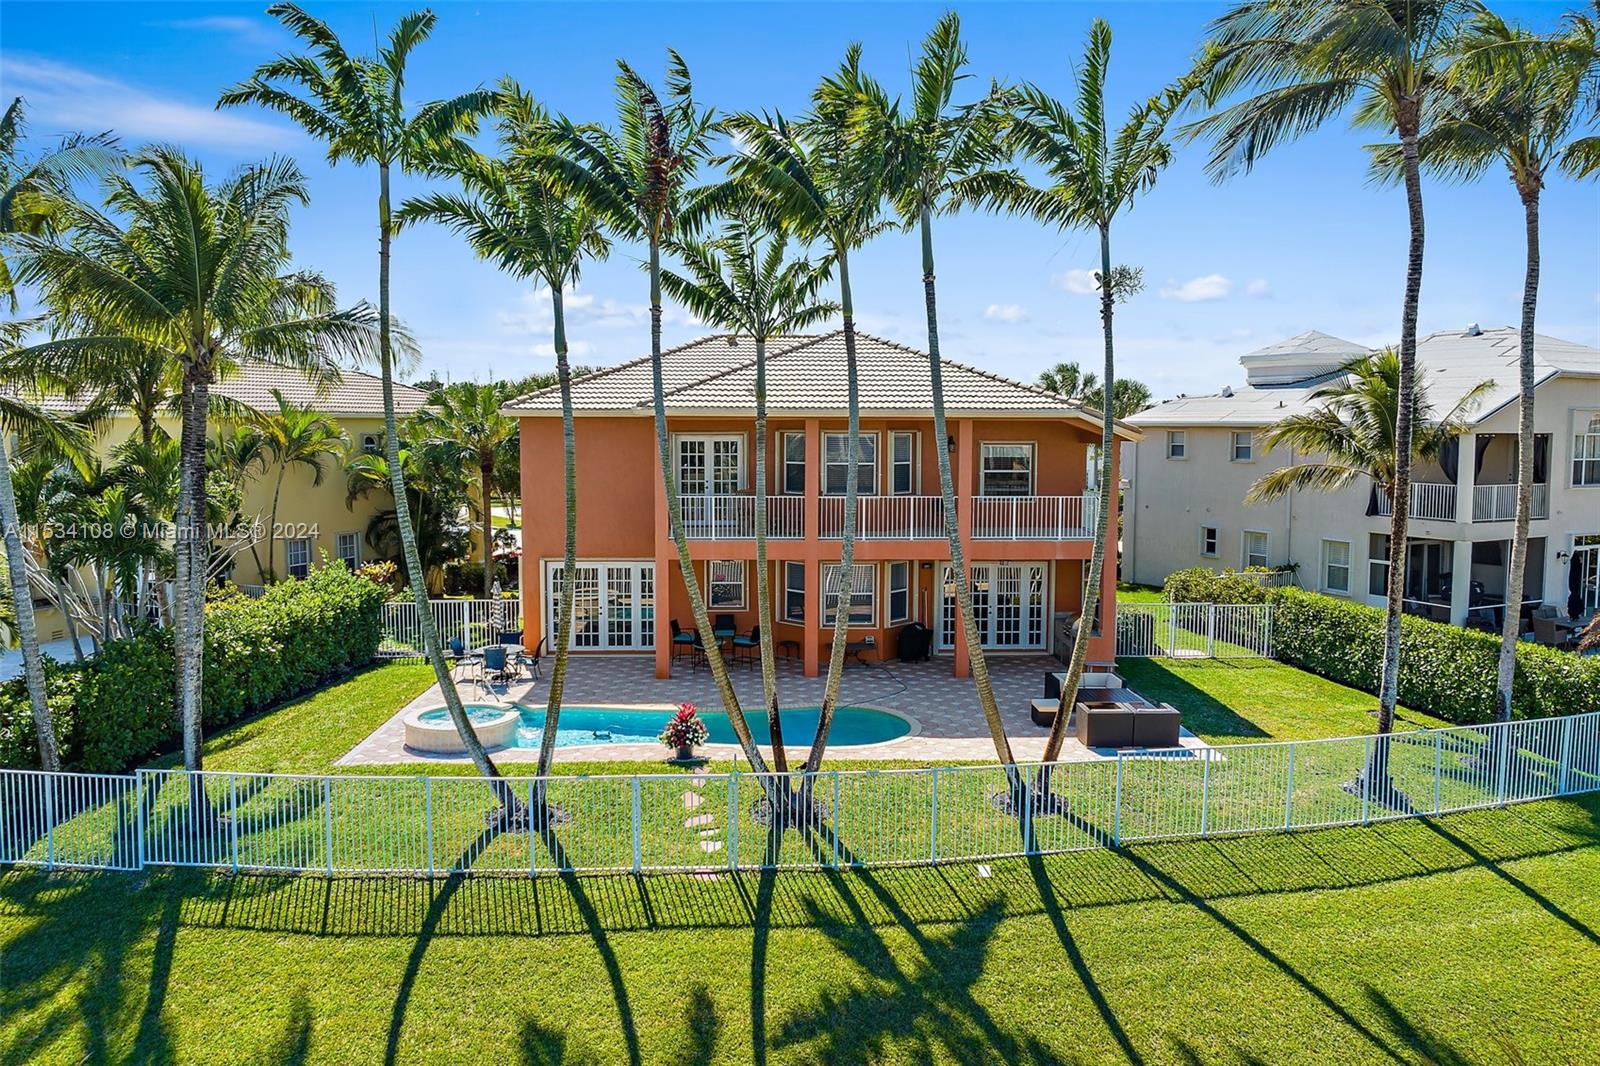 Property for Sale at 2164 Bellcrest Cir Cir, Royal Palm Beach, Palm Beach County, Florida - Bedrooms: 6 
Bathrooms: 4  - $945,000